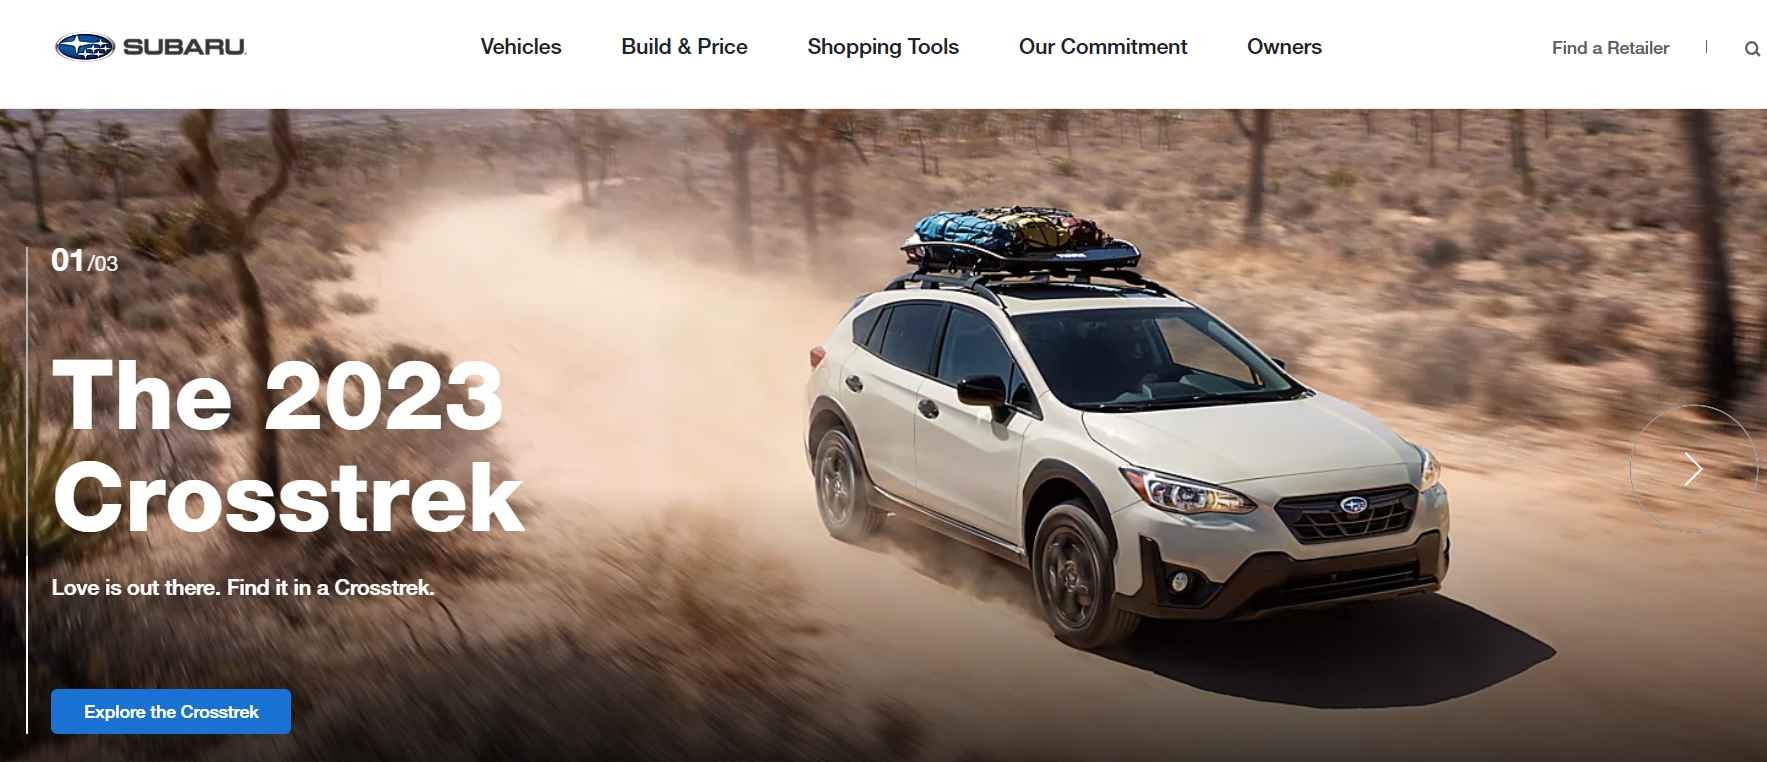 Marketing Strategy of Subaru - Ecom